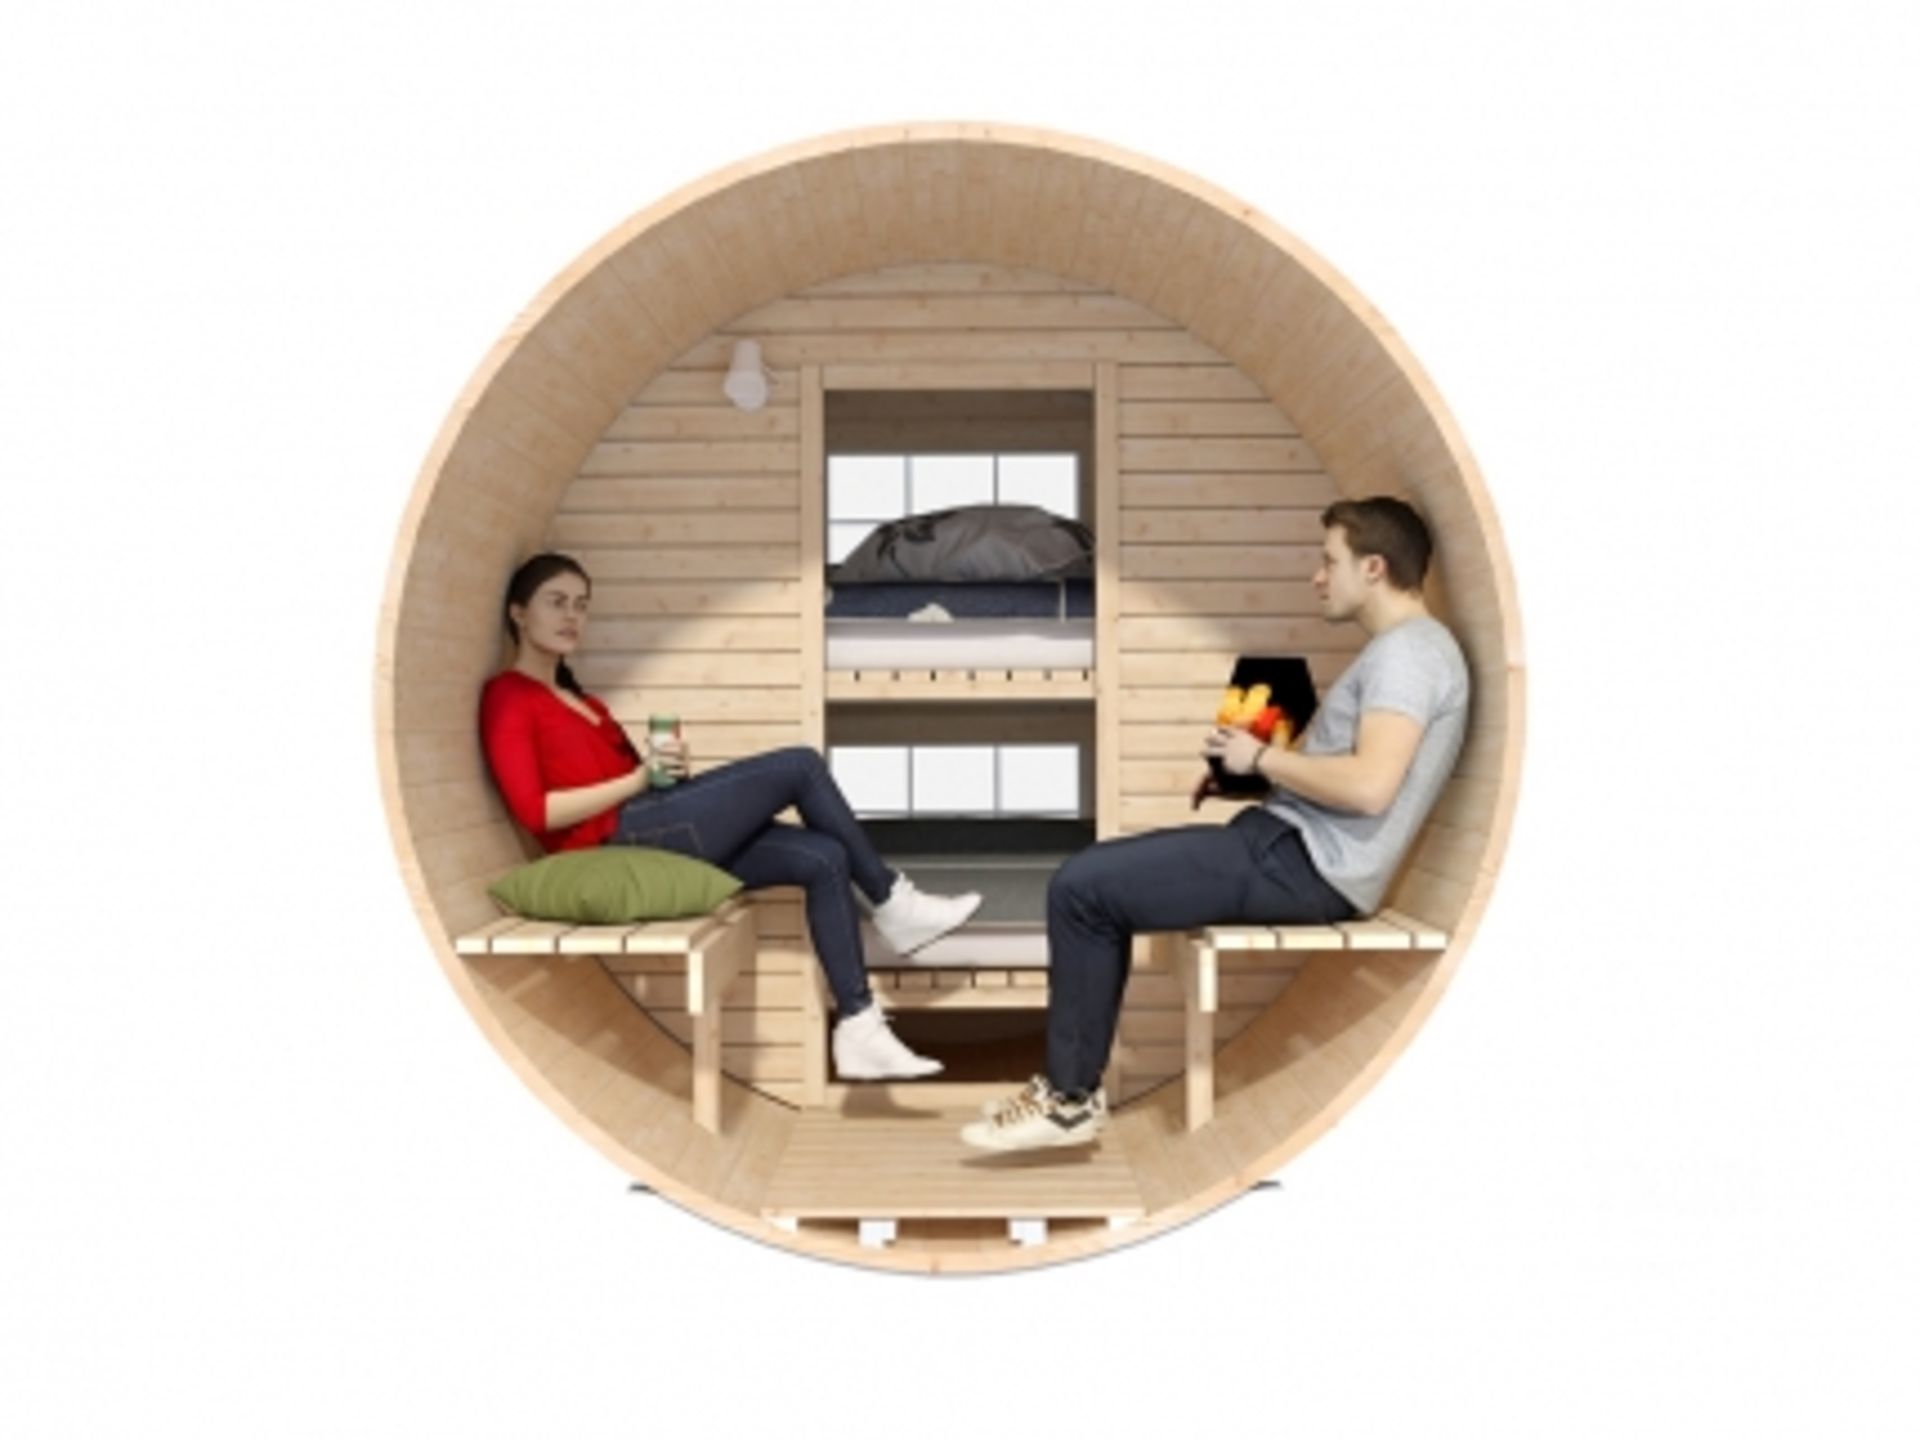 V Brand New 2.2 x 3.3m Barrel For Sleeping - Sleeping & Sitting Rooms Inside - Sleeping Room With - Bild 2 aus 4